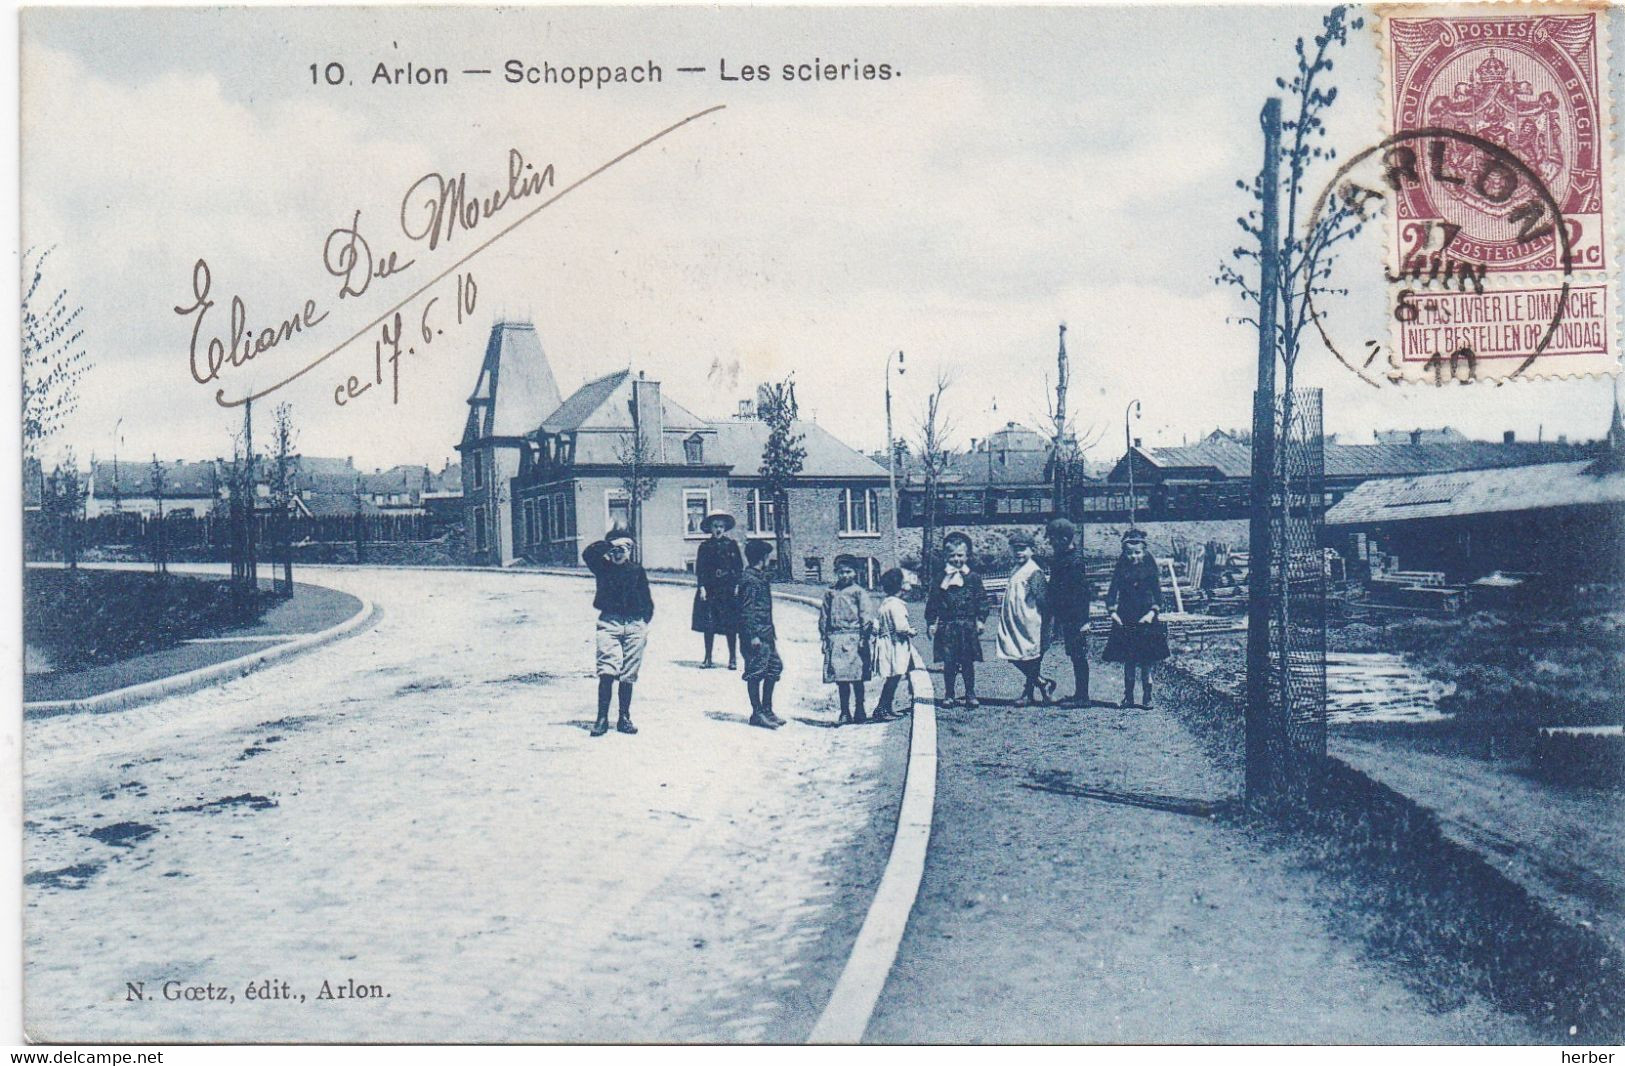 ARLON - AARLEN - 1910 - Schoppach - Les Scieries - N. Goetz - 10. Arlon - Arlon